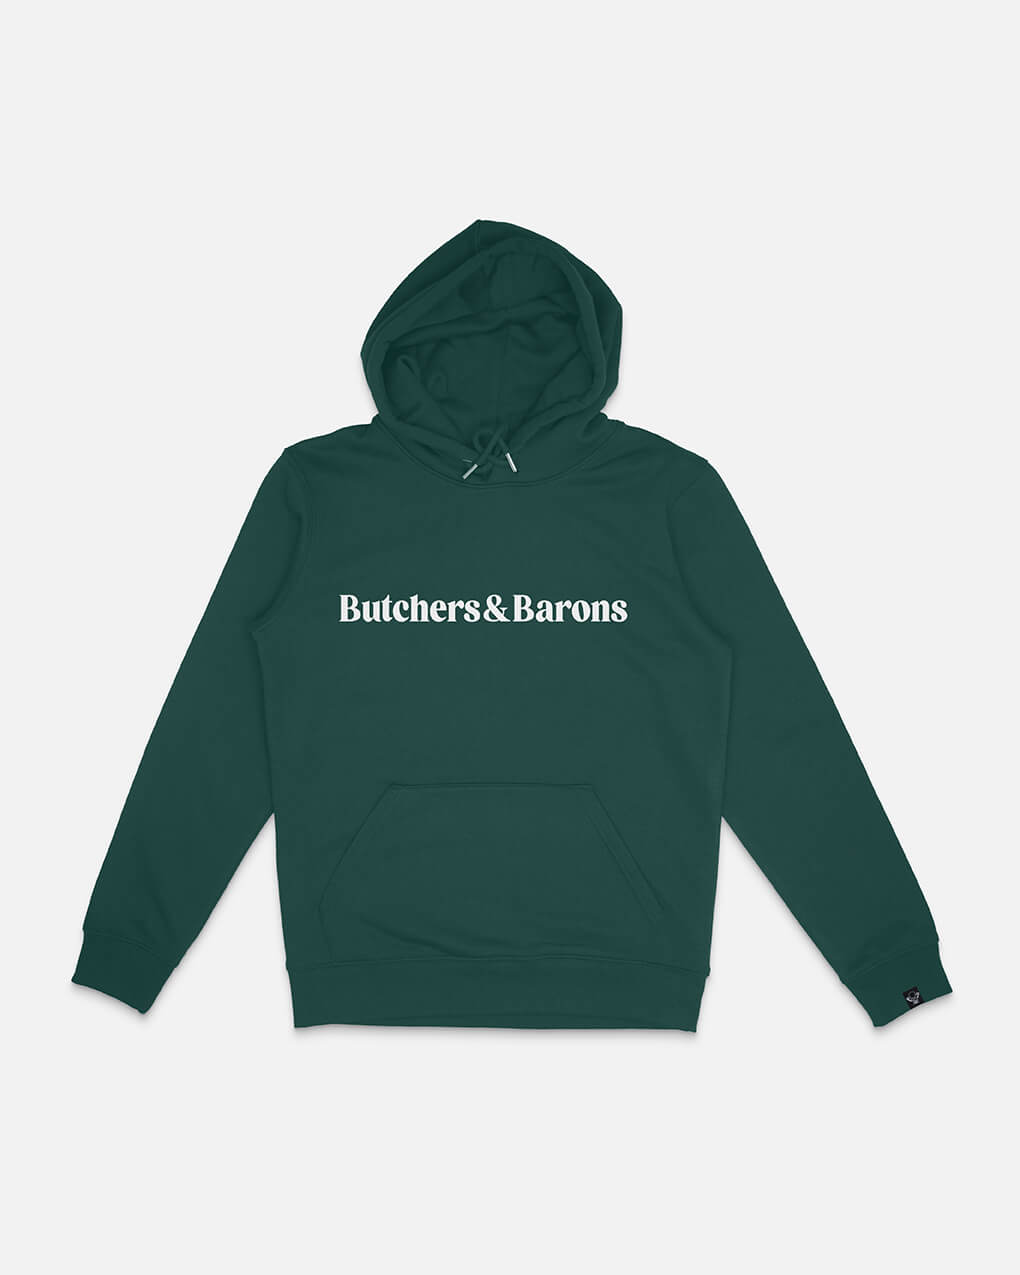 Butchers & Barons - dark green hoodie